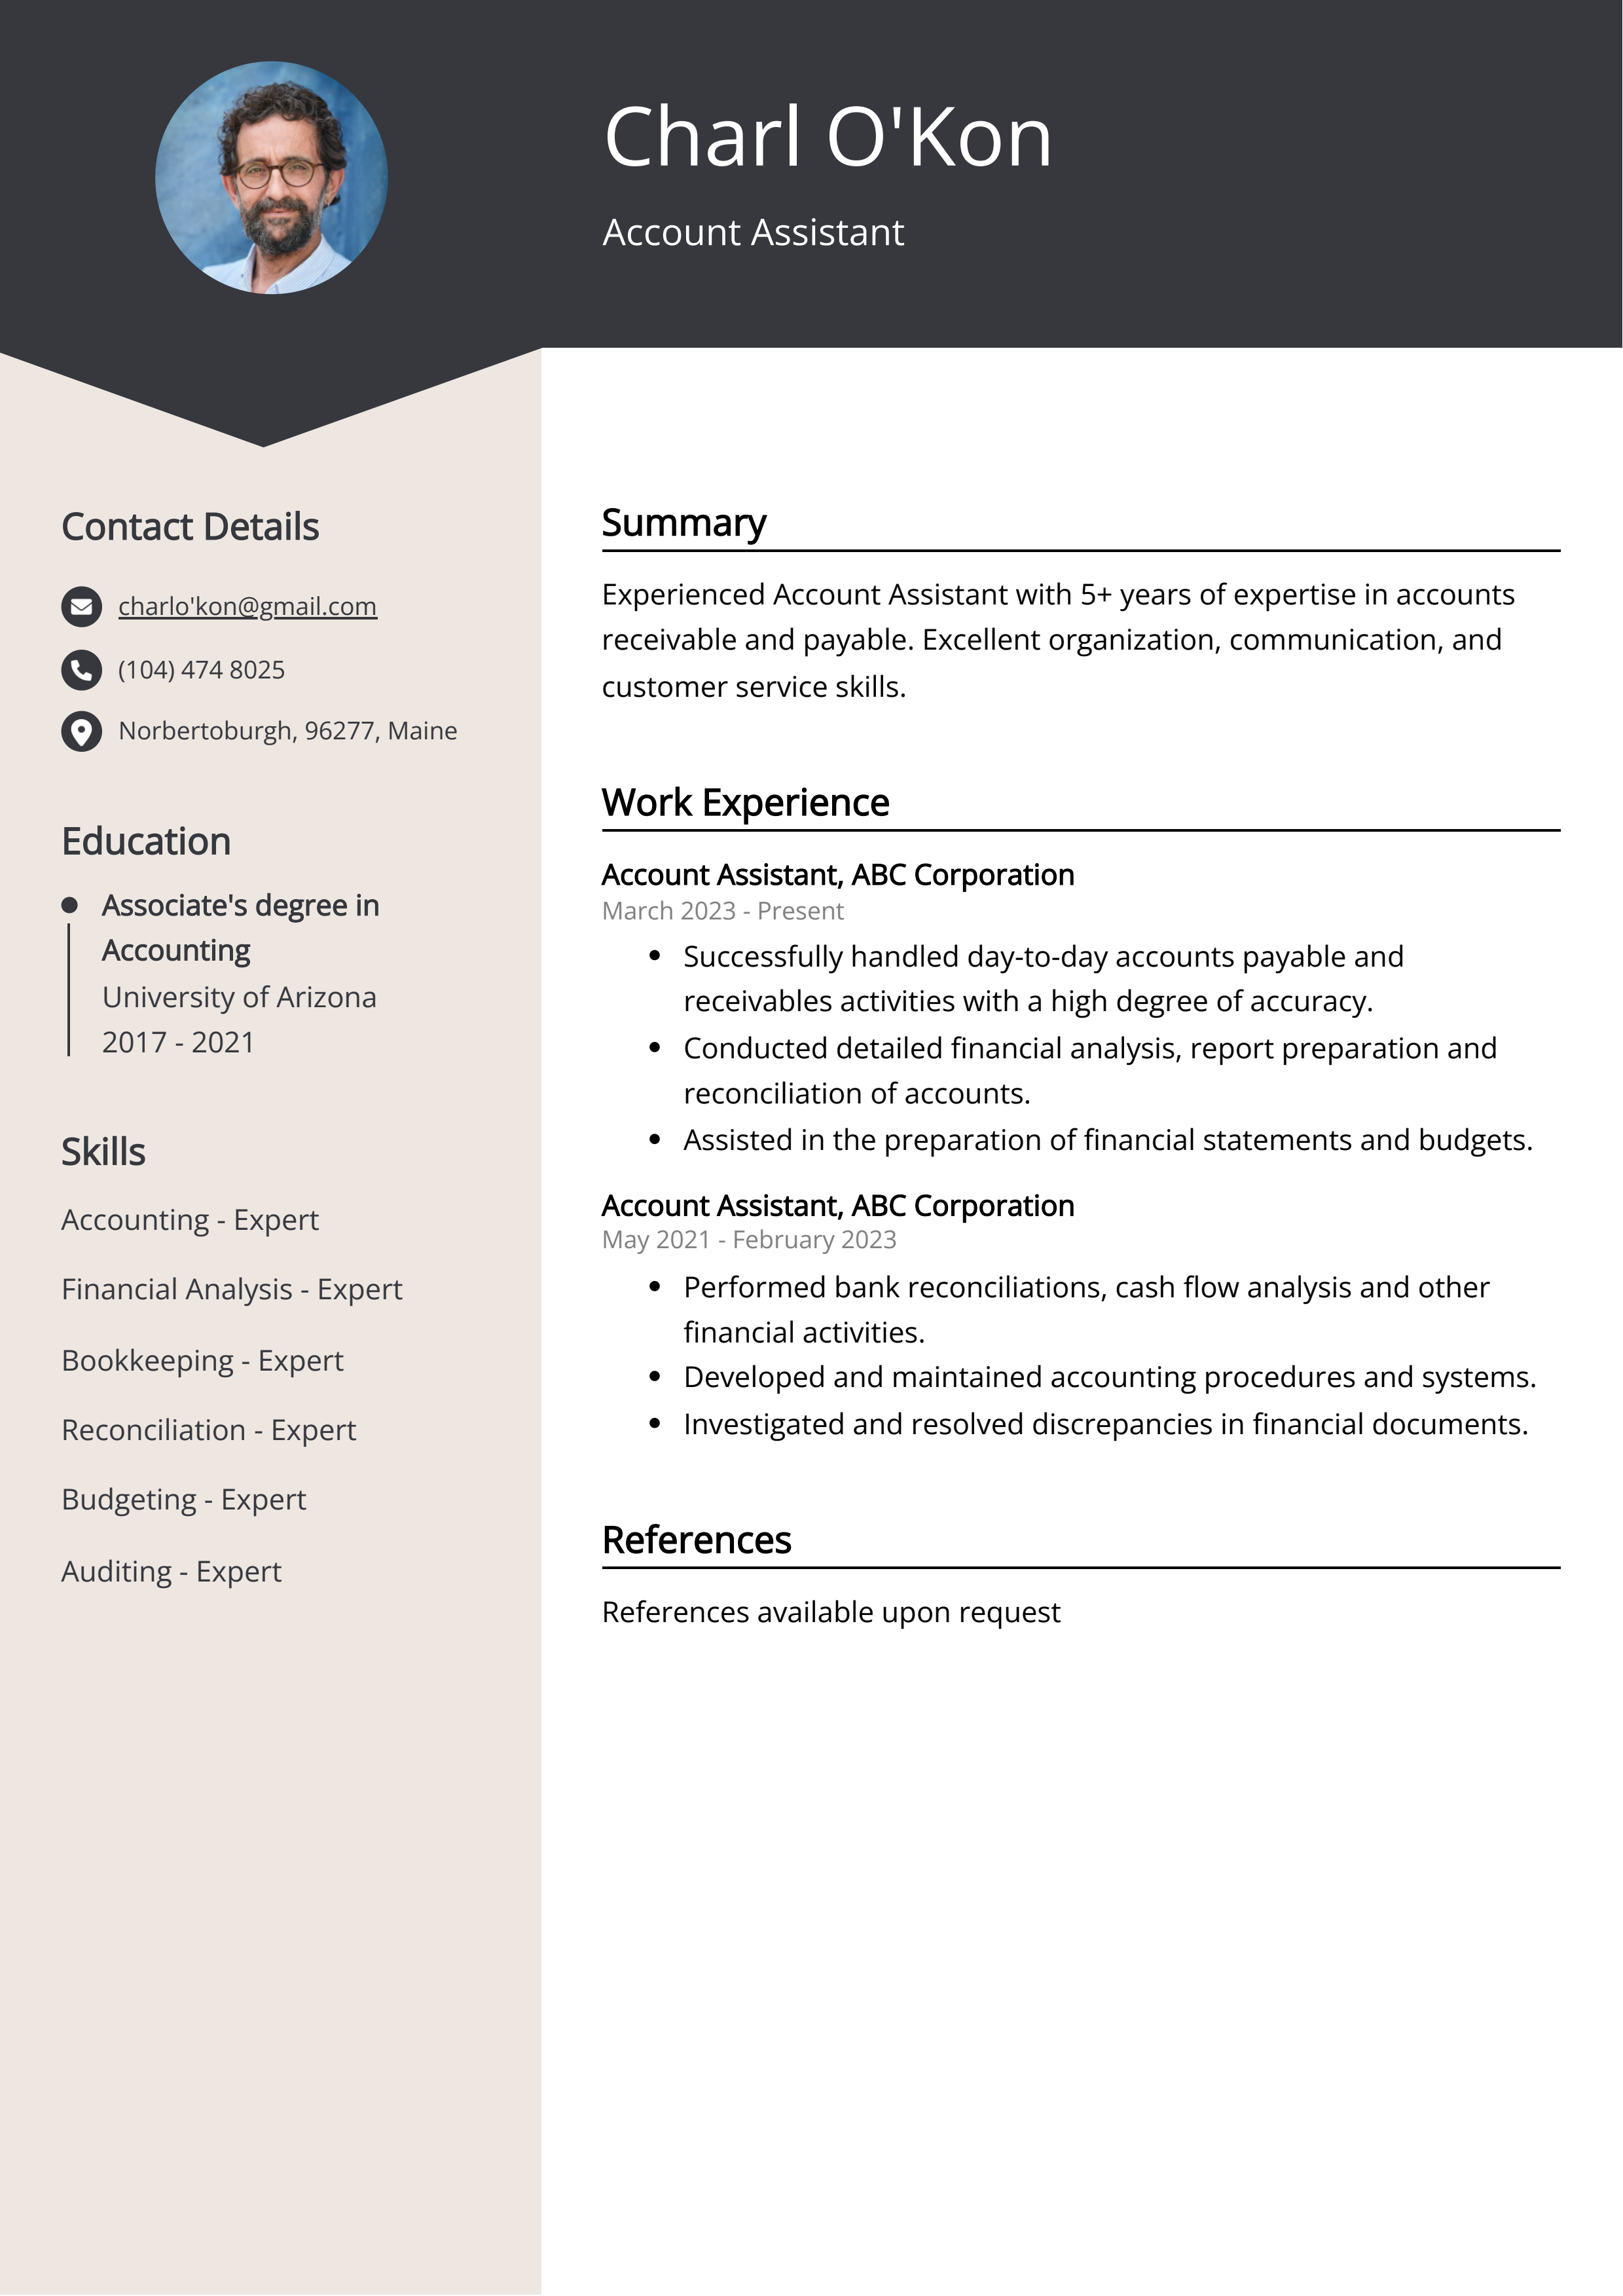 Account Assistant CV Example